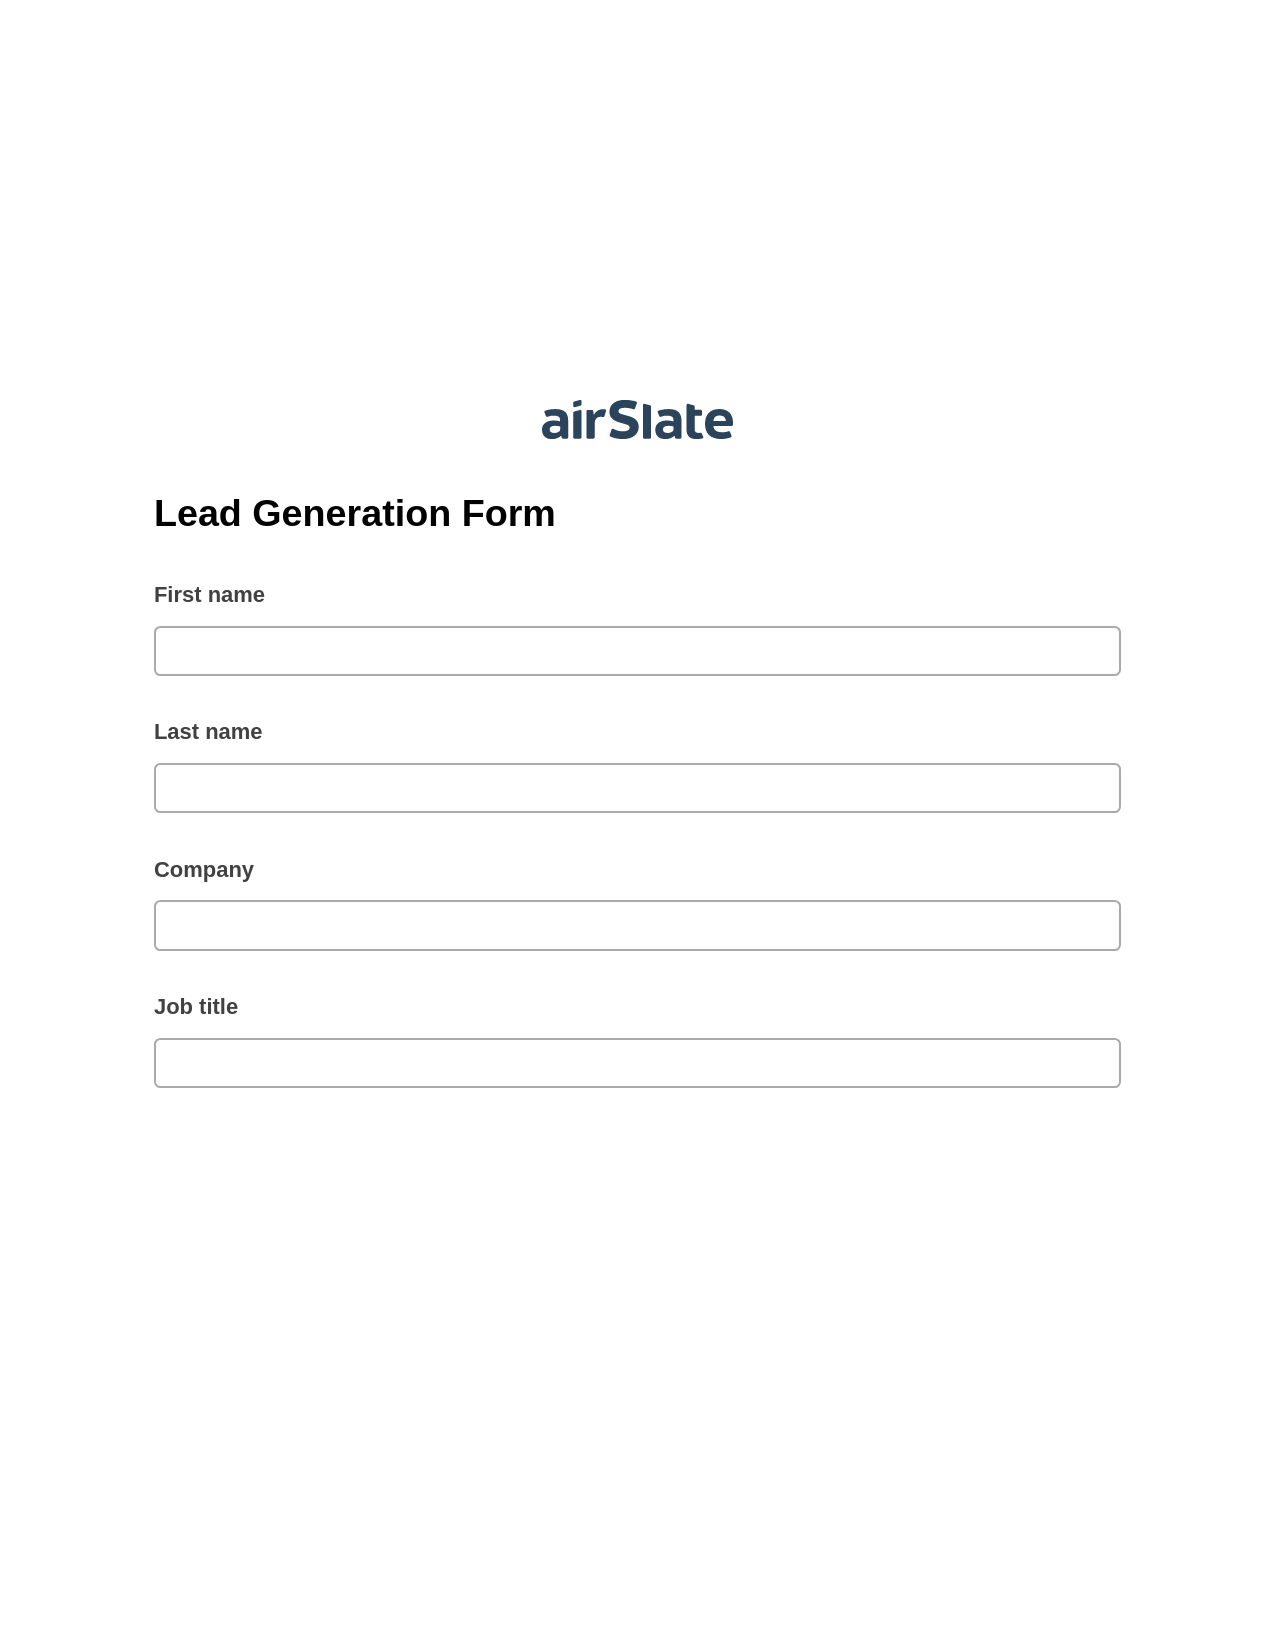 Multirole Lead Generation Form Pre-fill Dropdowns from Smartsheet Bot, SendGrid send Campaign bot, Archive to Box Bot